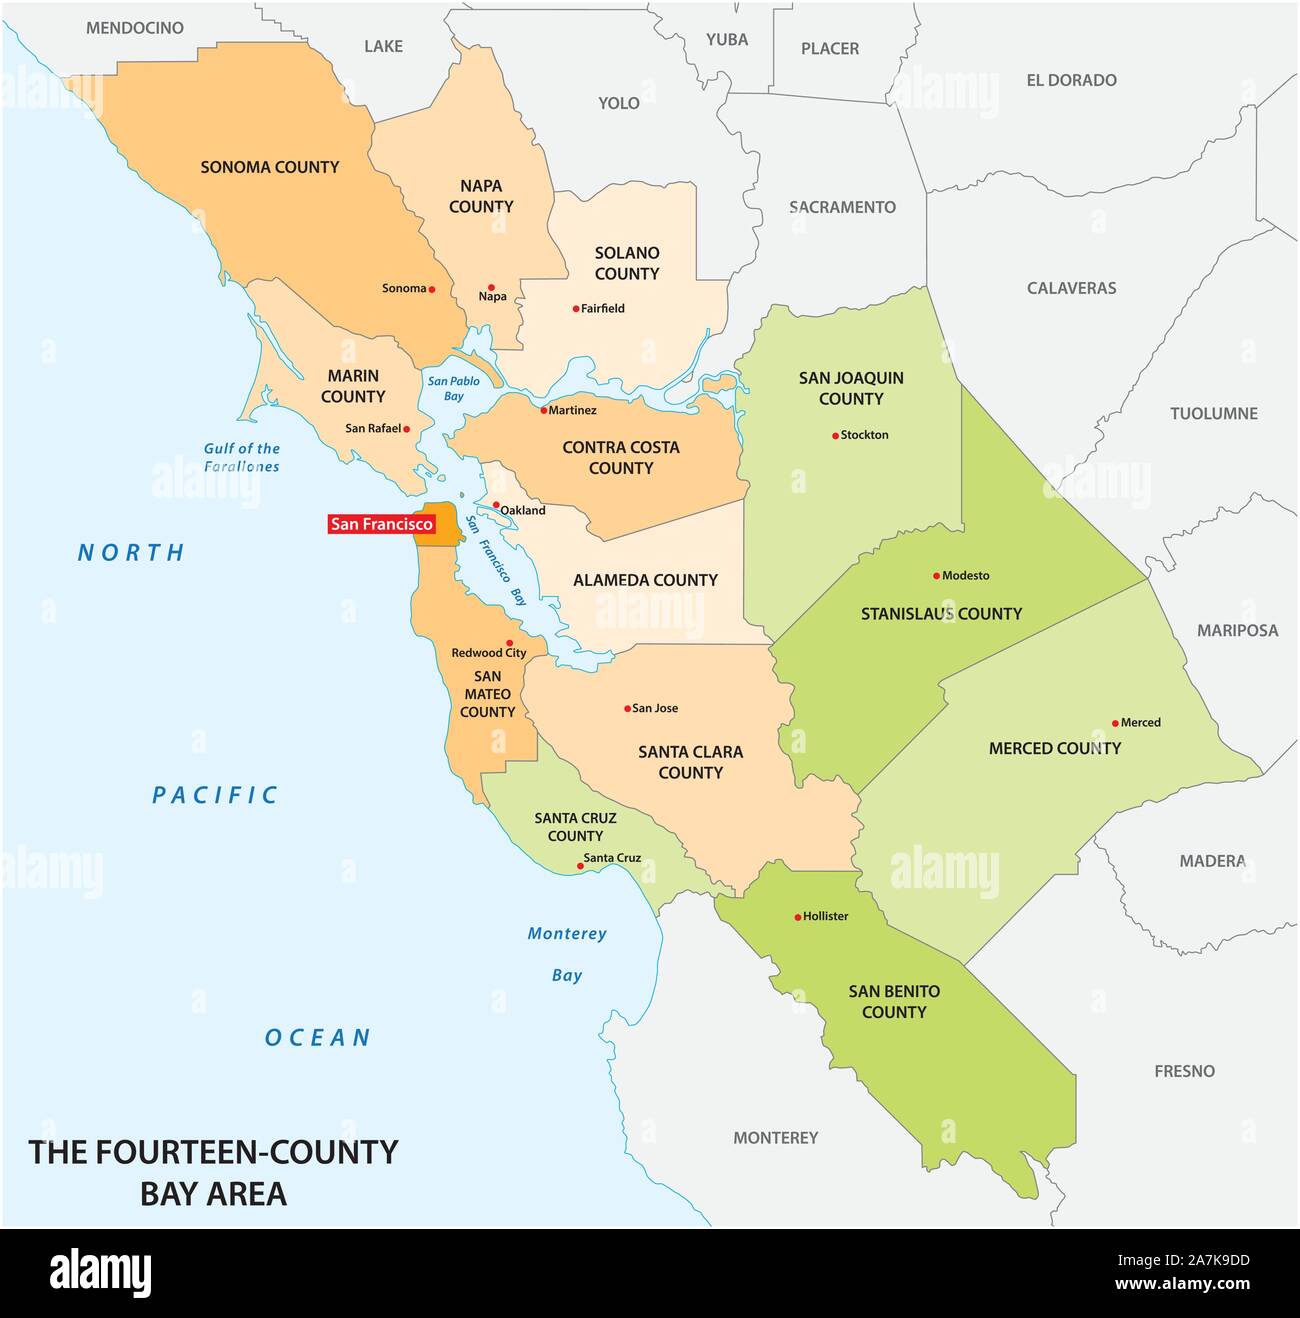 Administrative Map Of The California Region San Francisco Bay Area